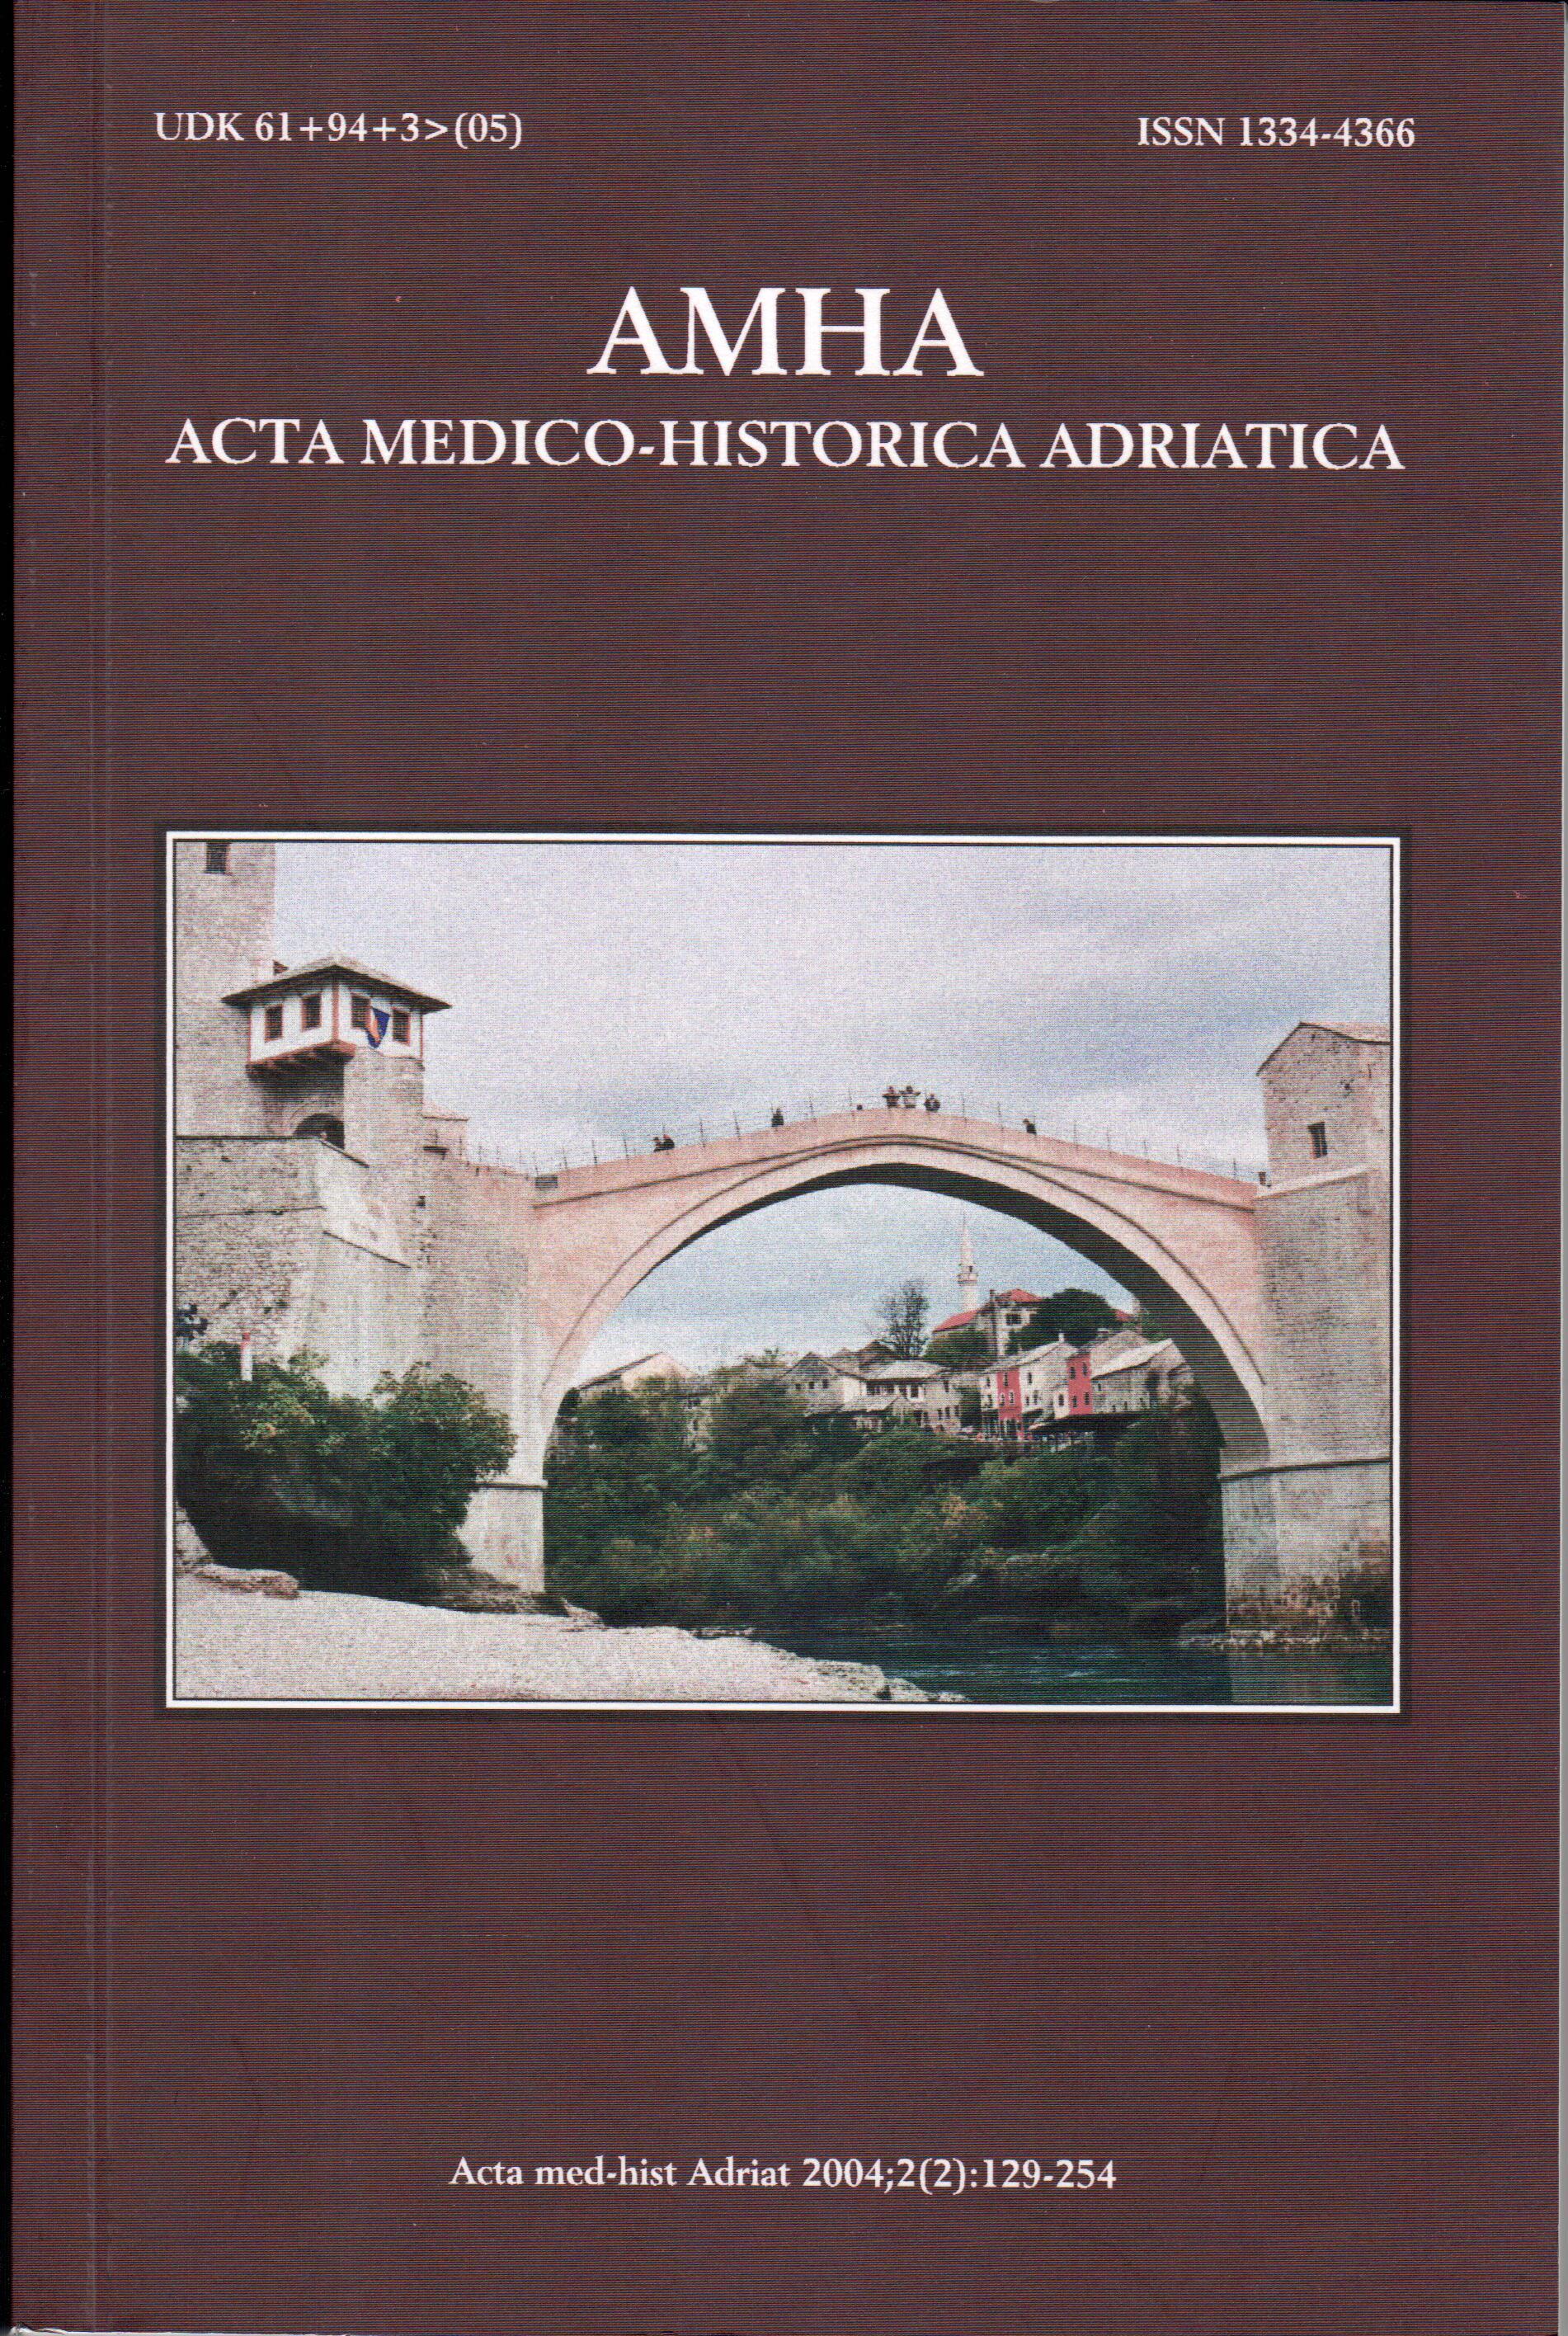 					View Vol. 2 No. 2 (2004): Vol 2 No 2 (2004): AMHA – Acta medico-historica Adriatica
				